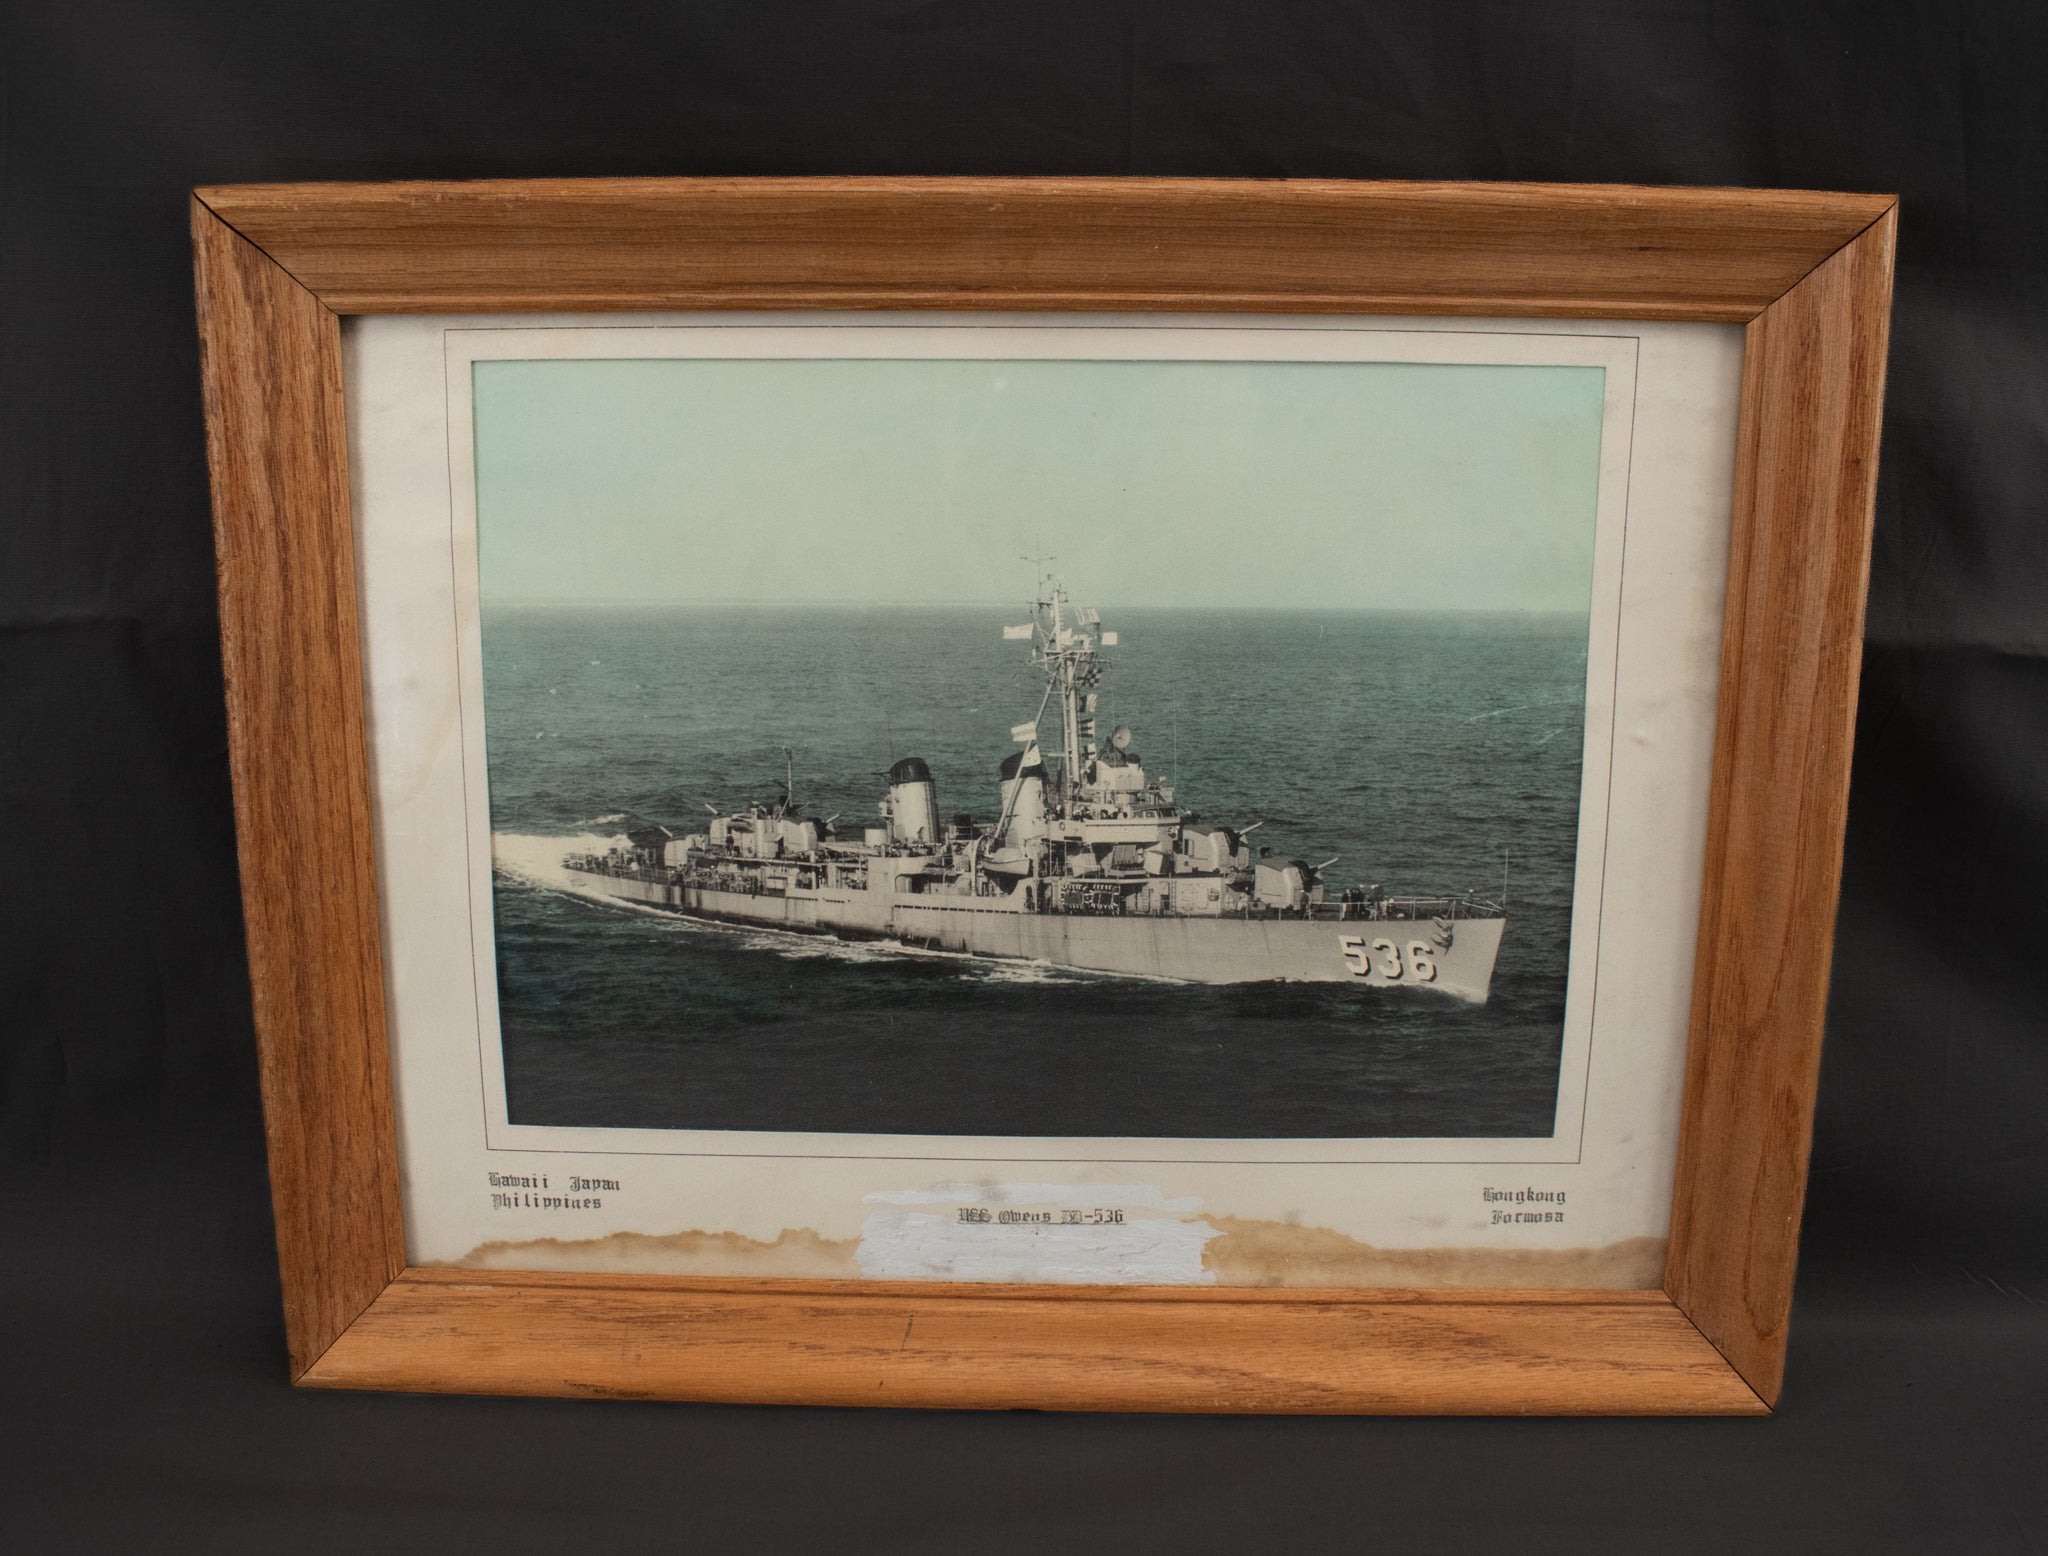 USS Owens DD-536 Philipines Japan Hong Kong Frame Photo 14x18"